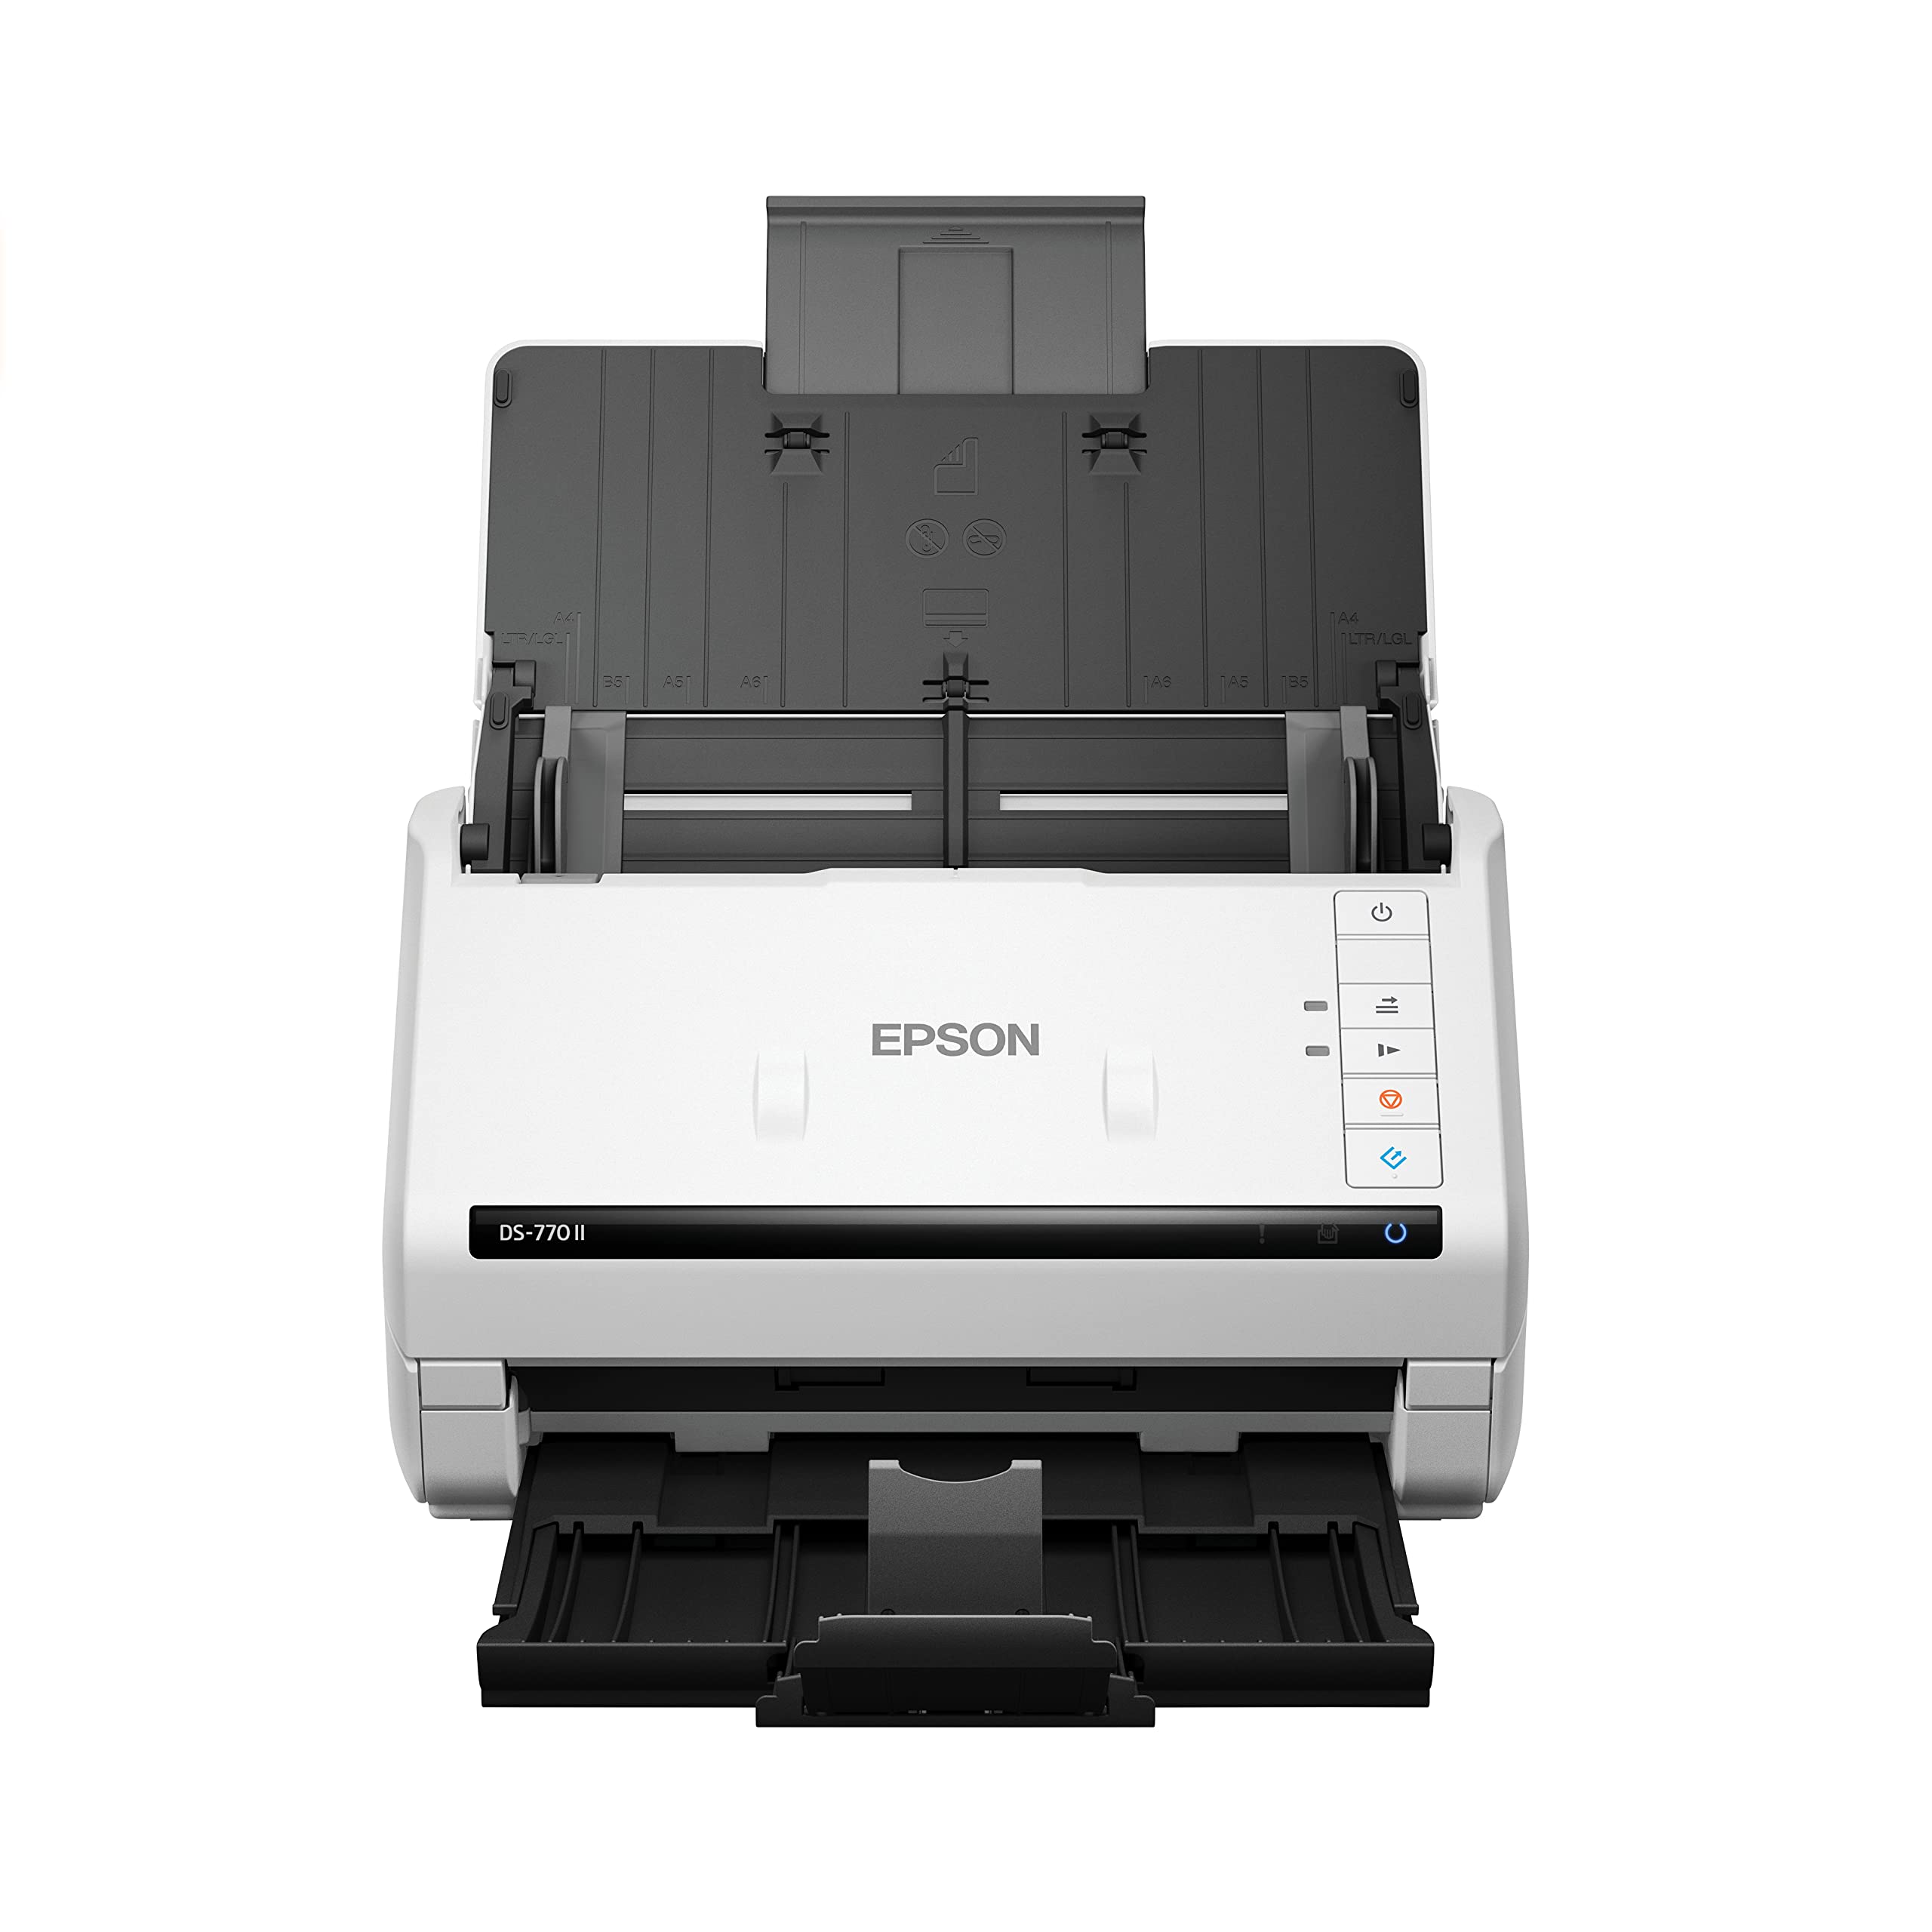 Epson DS-770 II 彩色双面文档扫描仪适用于 PC 和 Mac，配有 100 页自动文档进纸器 (ADF)、Twain 和 ISIS 驱动程序